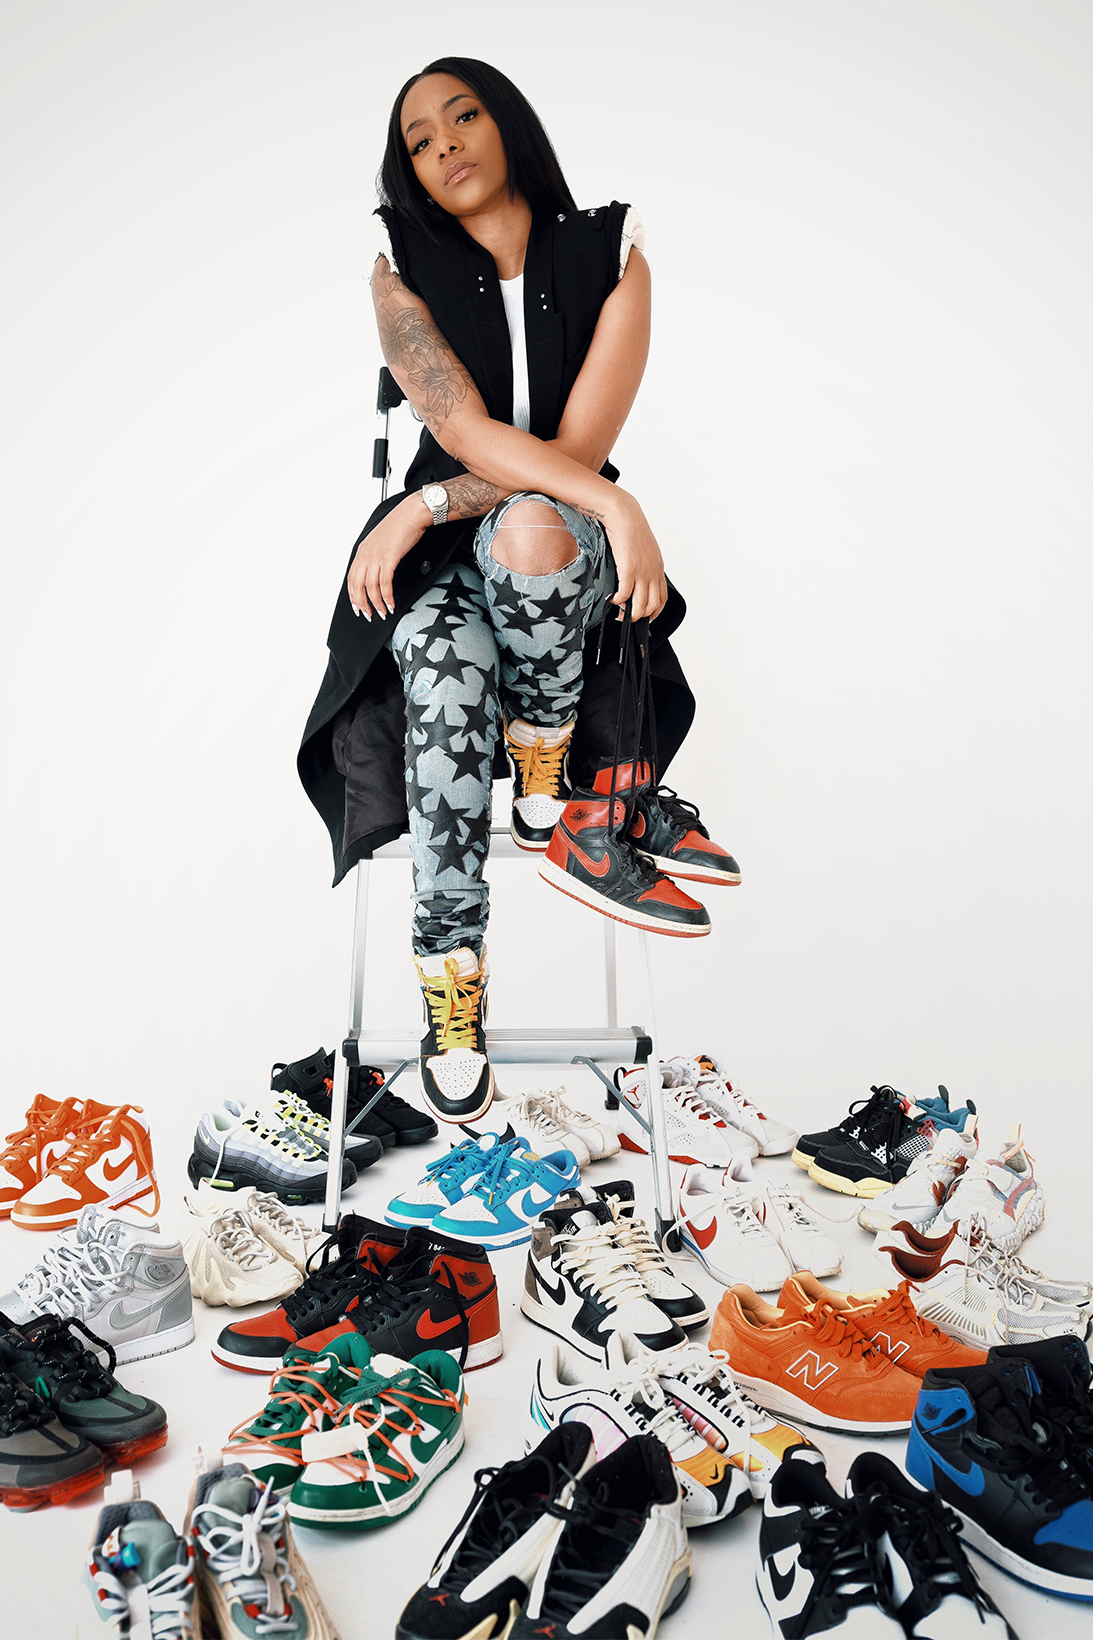 shaniqua j sneaker collector content creator wardrobe stylist influencer fashion kicks footwear nike air jordan 1